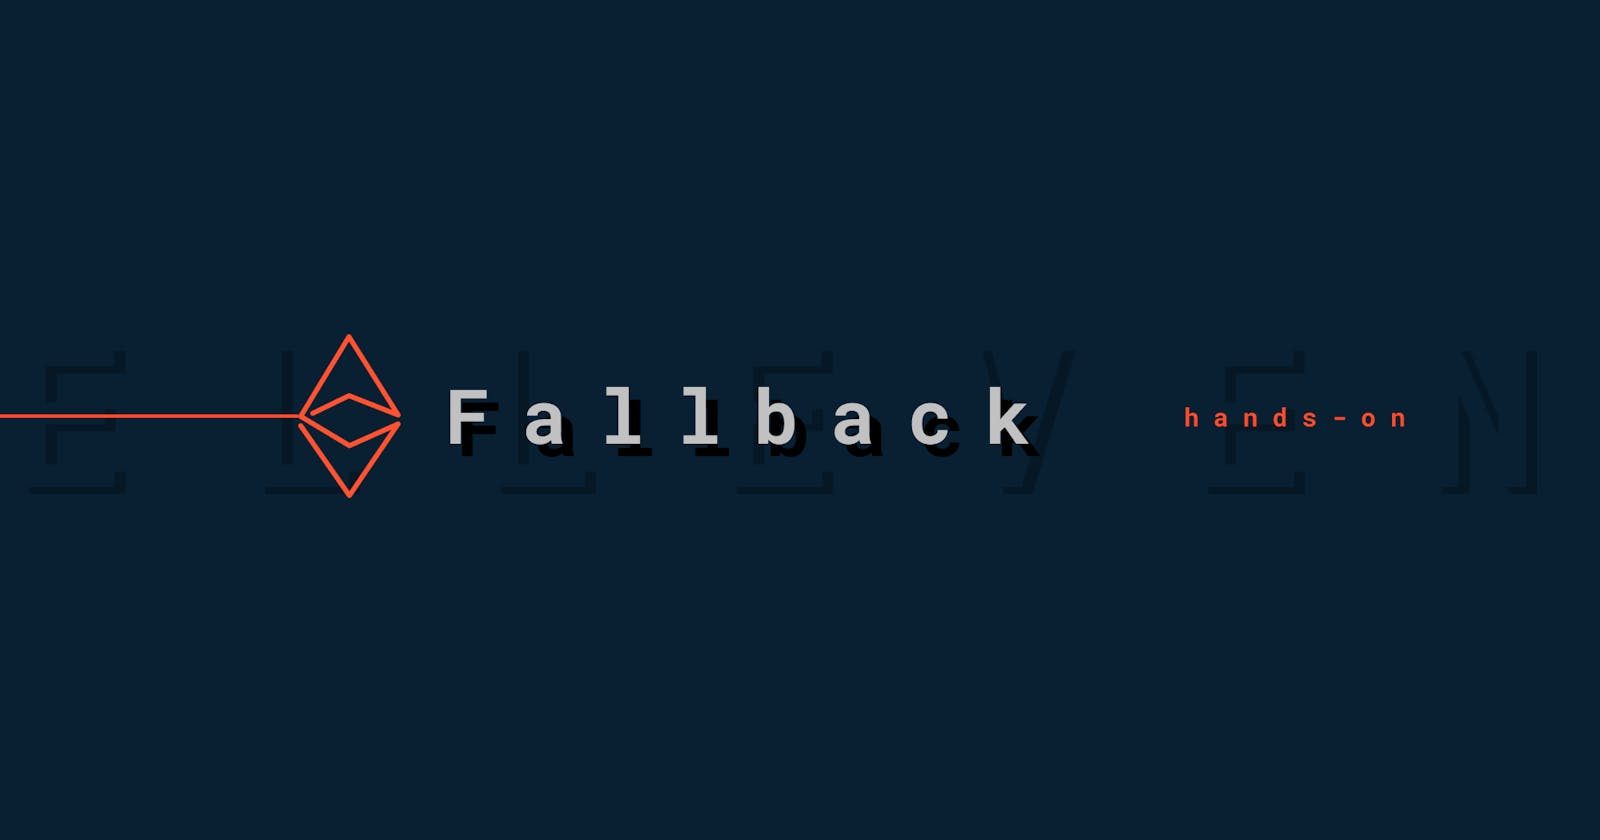 1.1 Fallback hands-on [CTF][Blockchain Security]